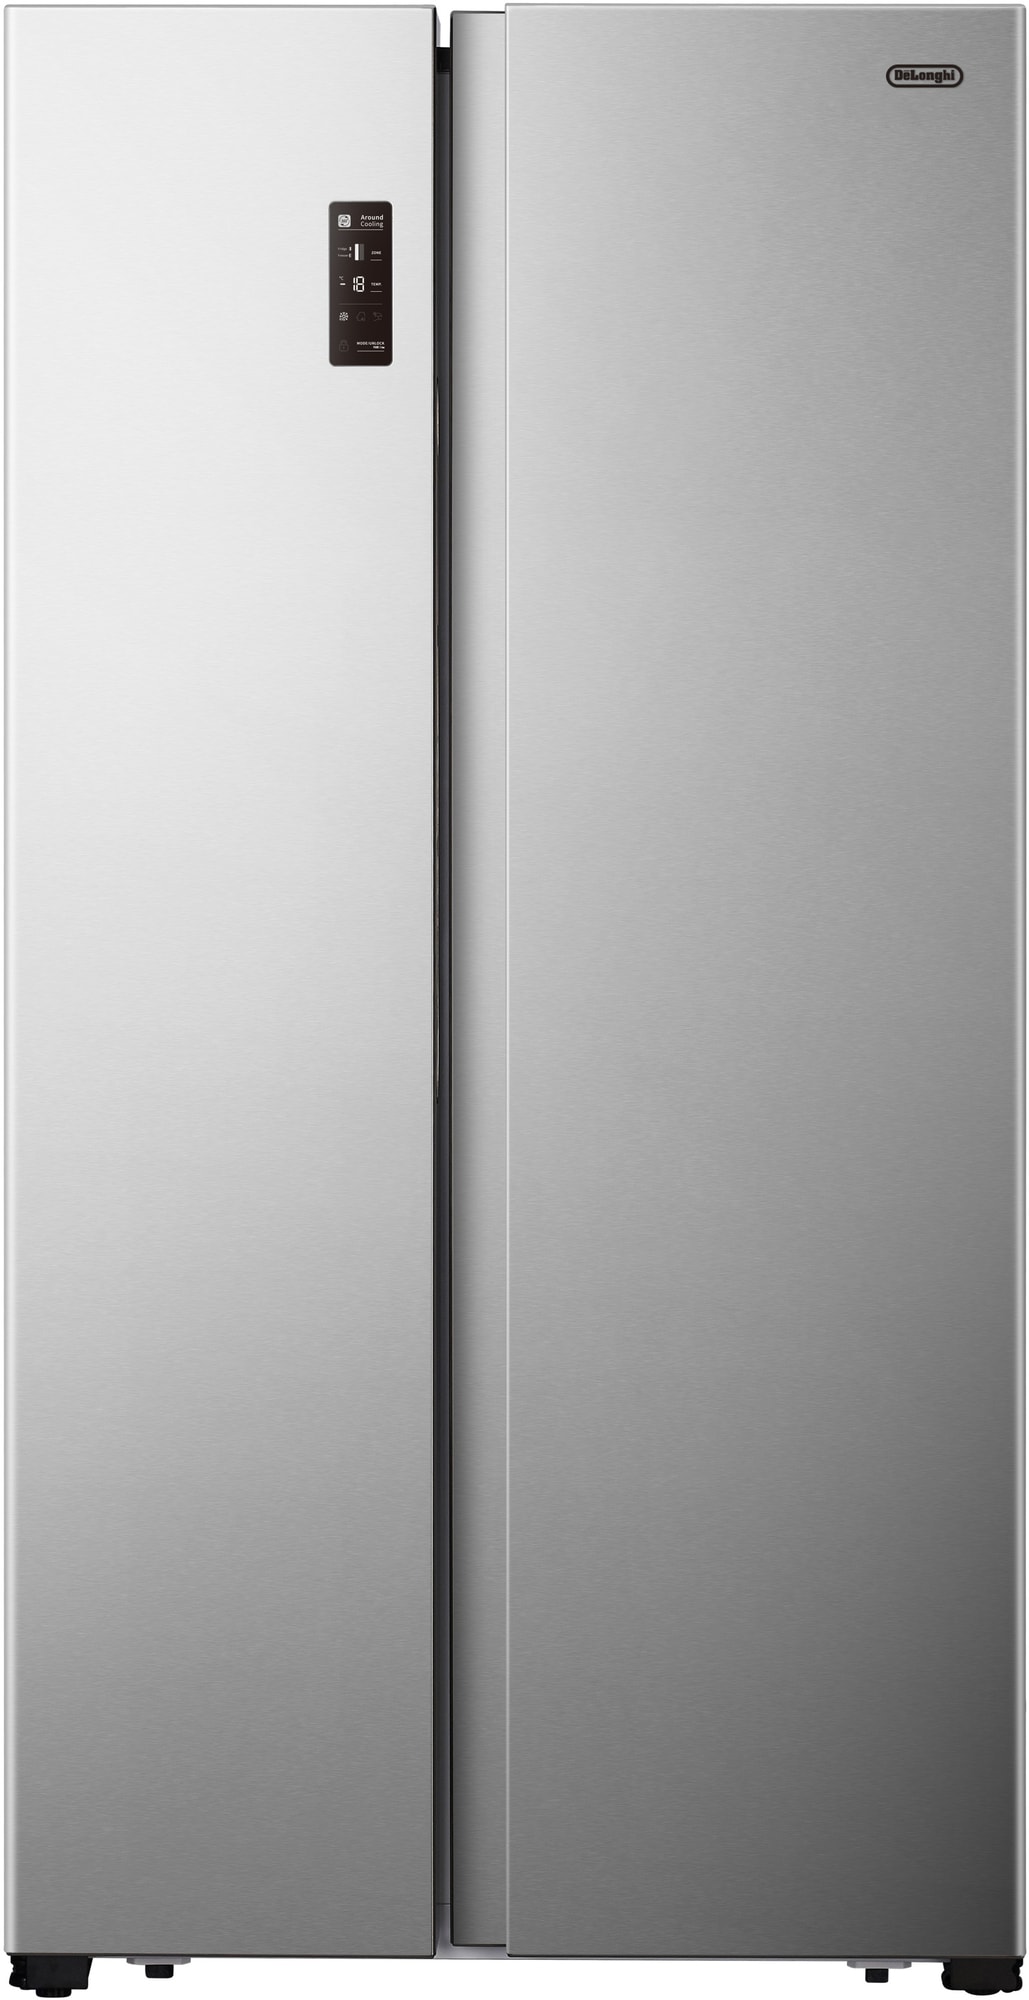 Delonghi side-by-side køleskab DSBSX23E thumbnail